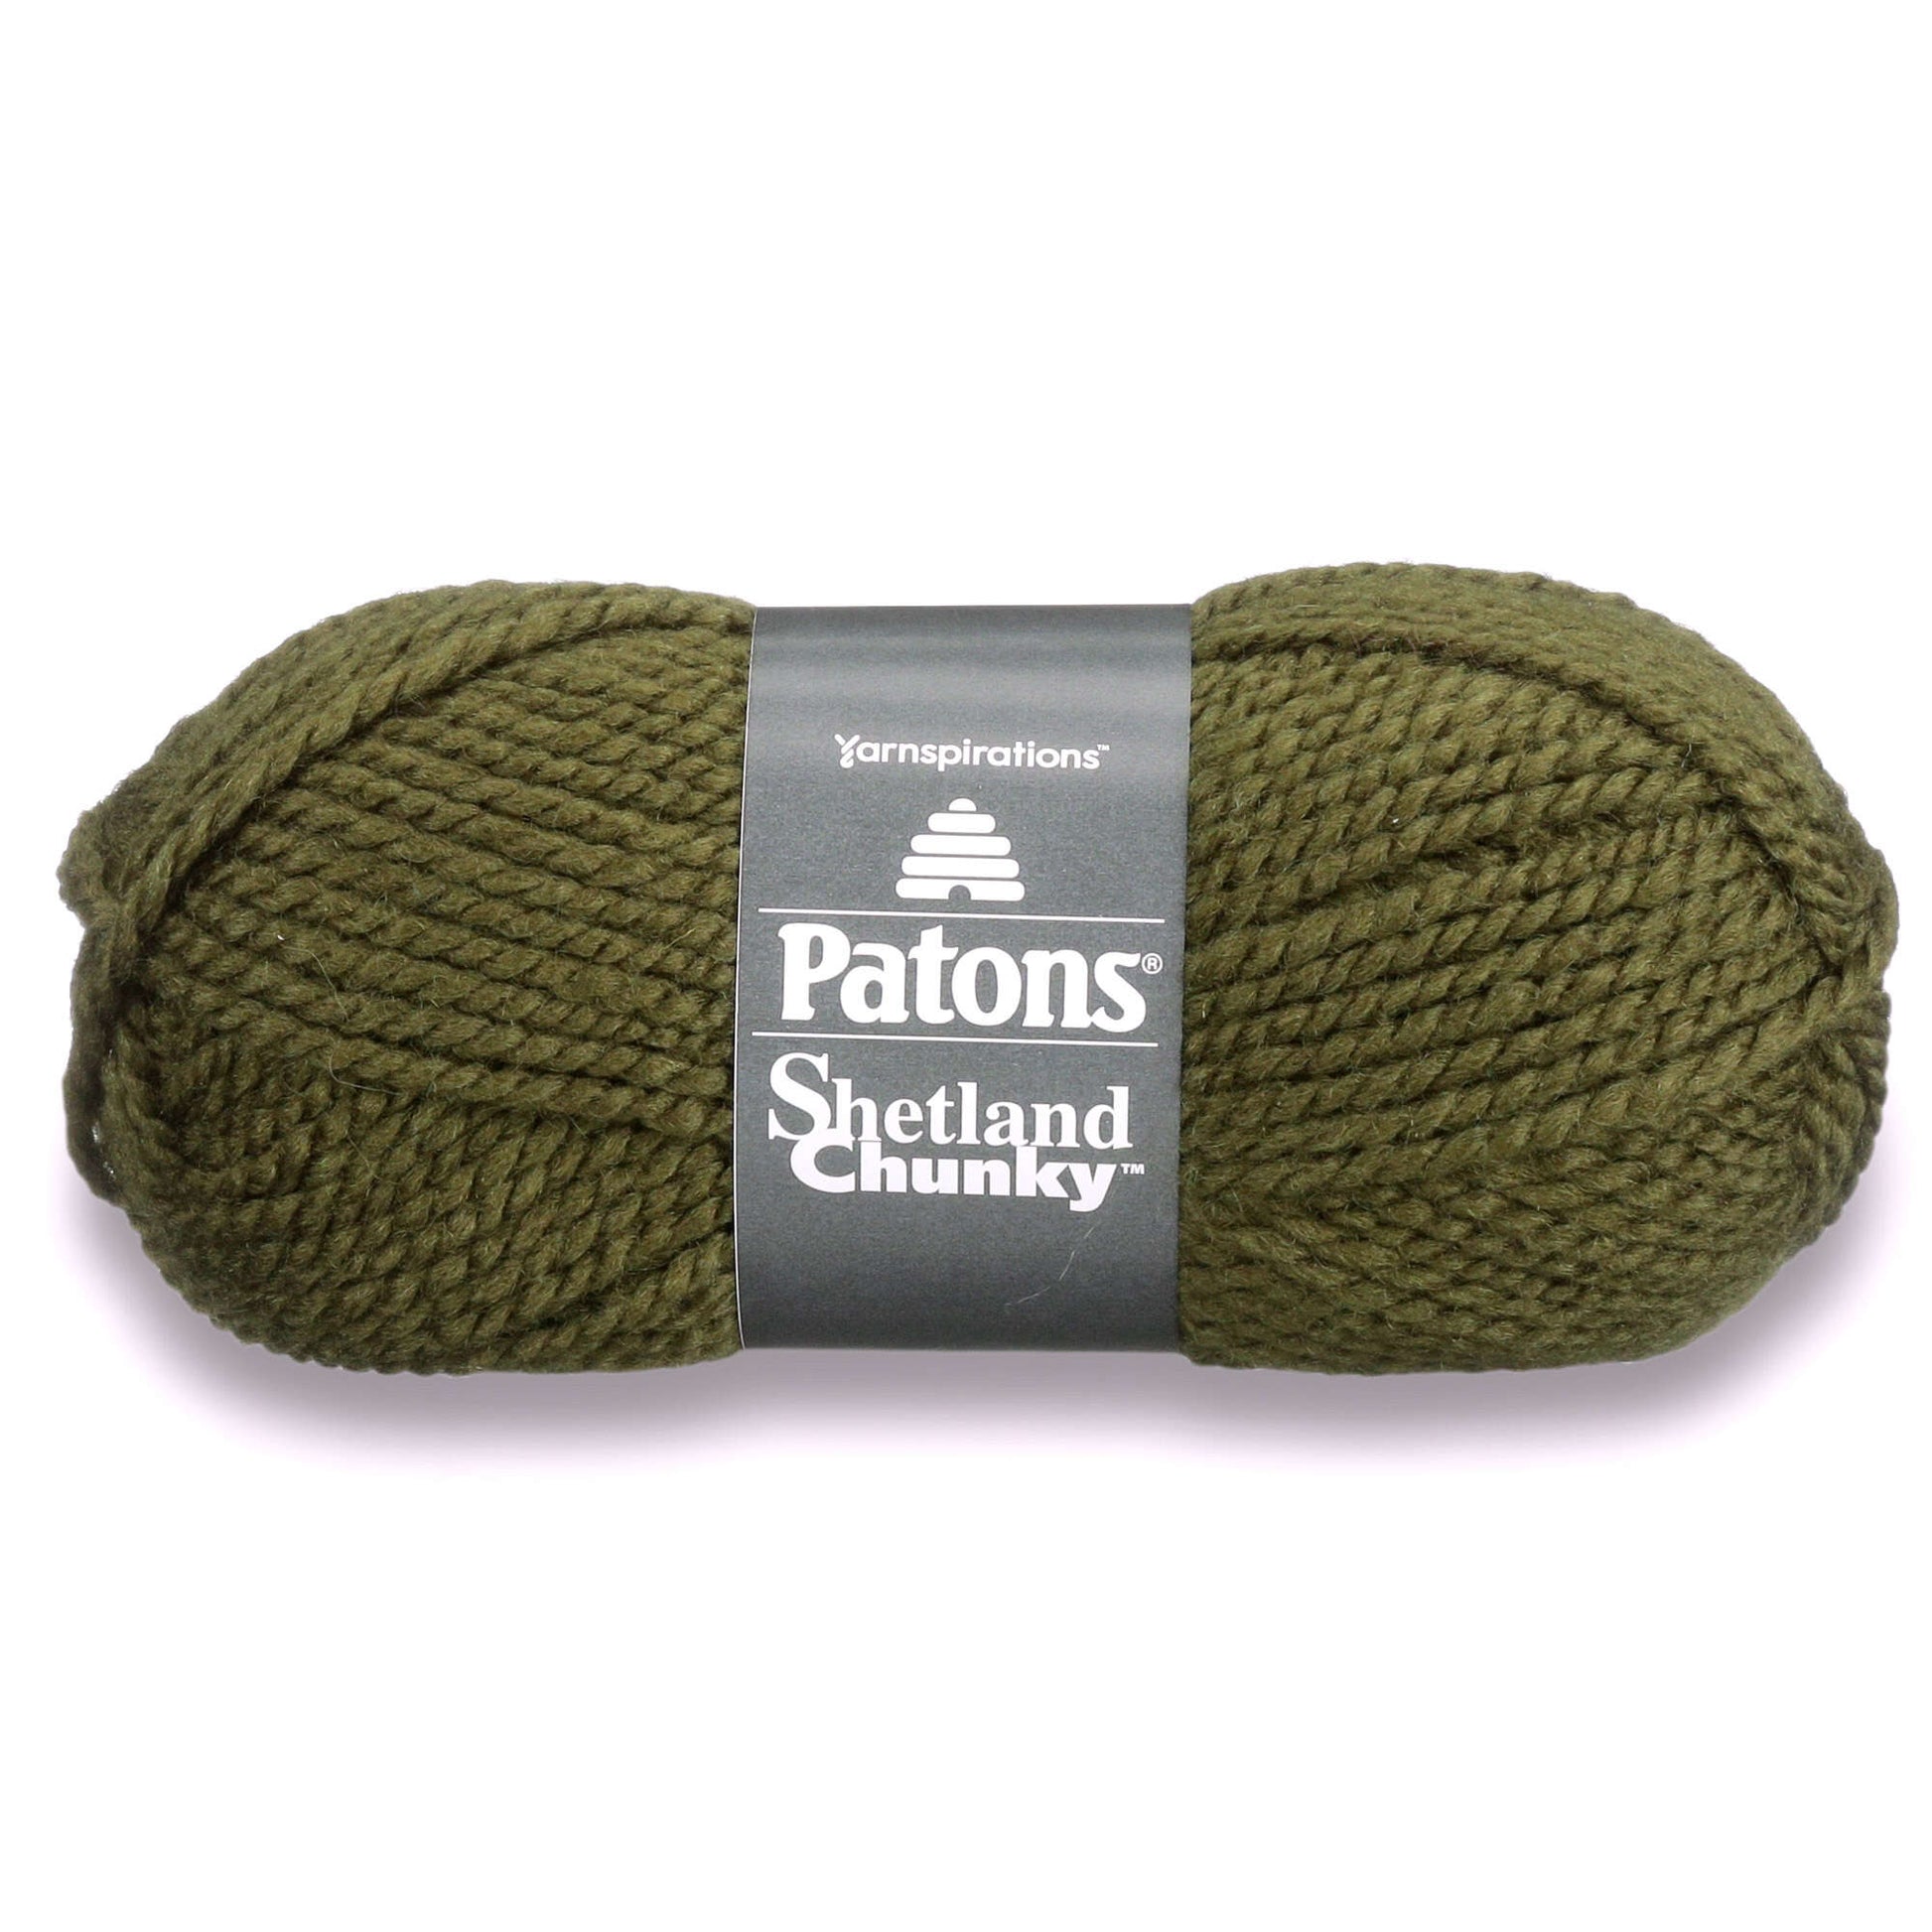 Patons Shetland Chunky Yarn - Clearance Shades* | Yarnspirations